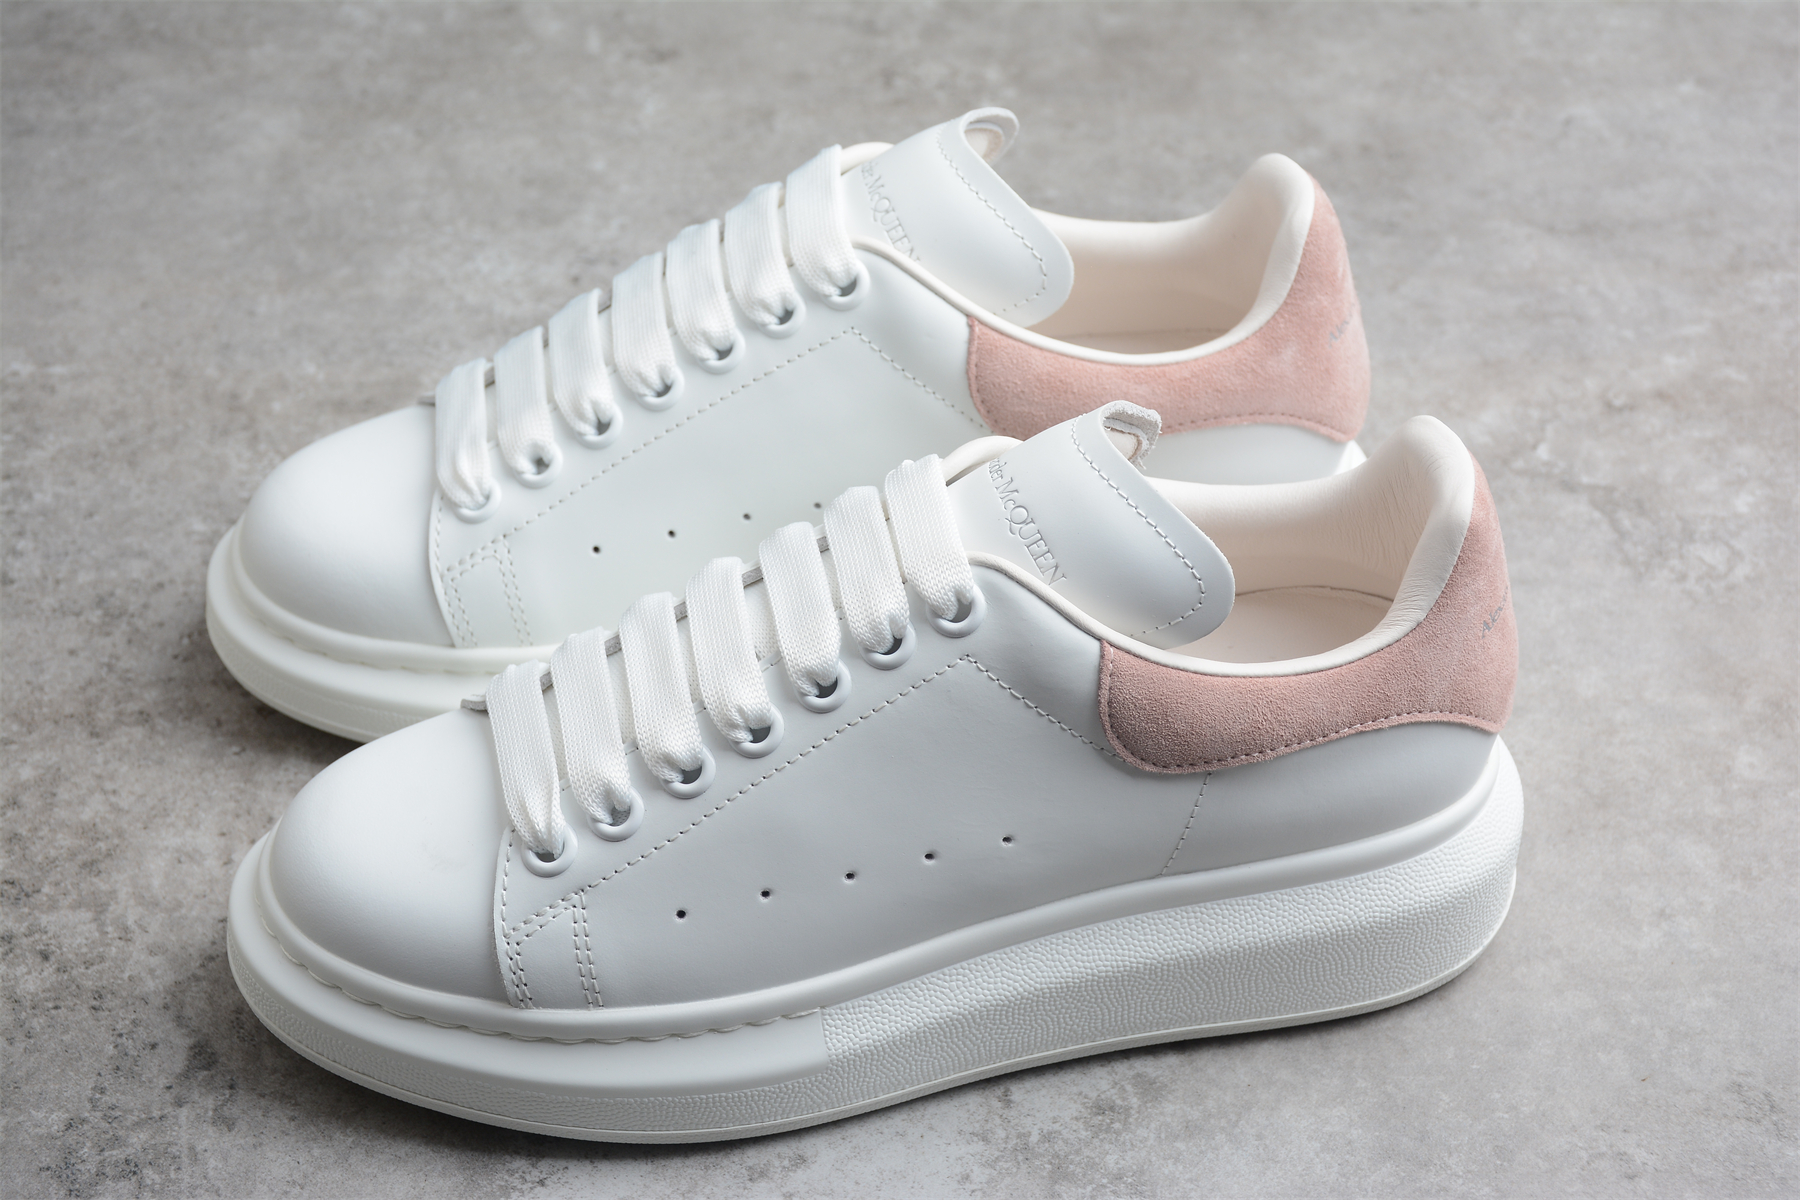 Alex McQ  women sneakers white pink-c heel